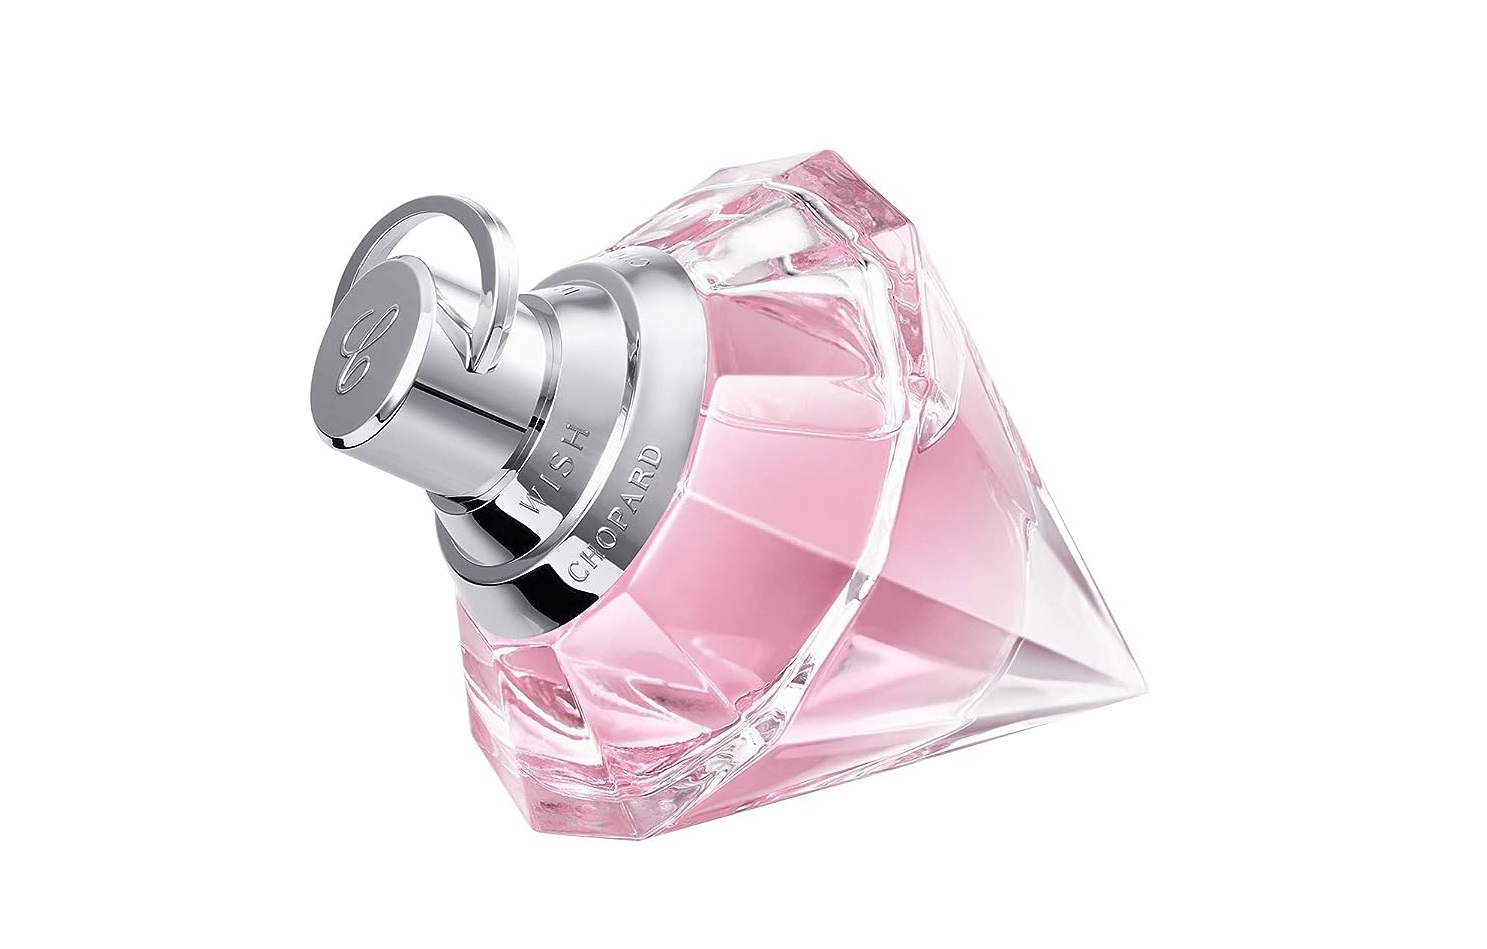 8 Best Perfumes Under INR 5000 For Brides